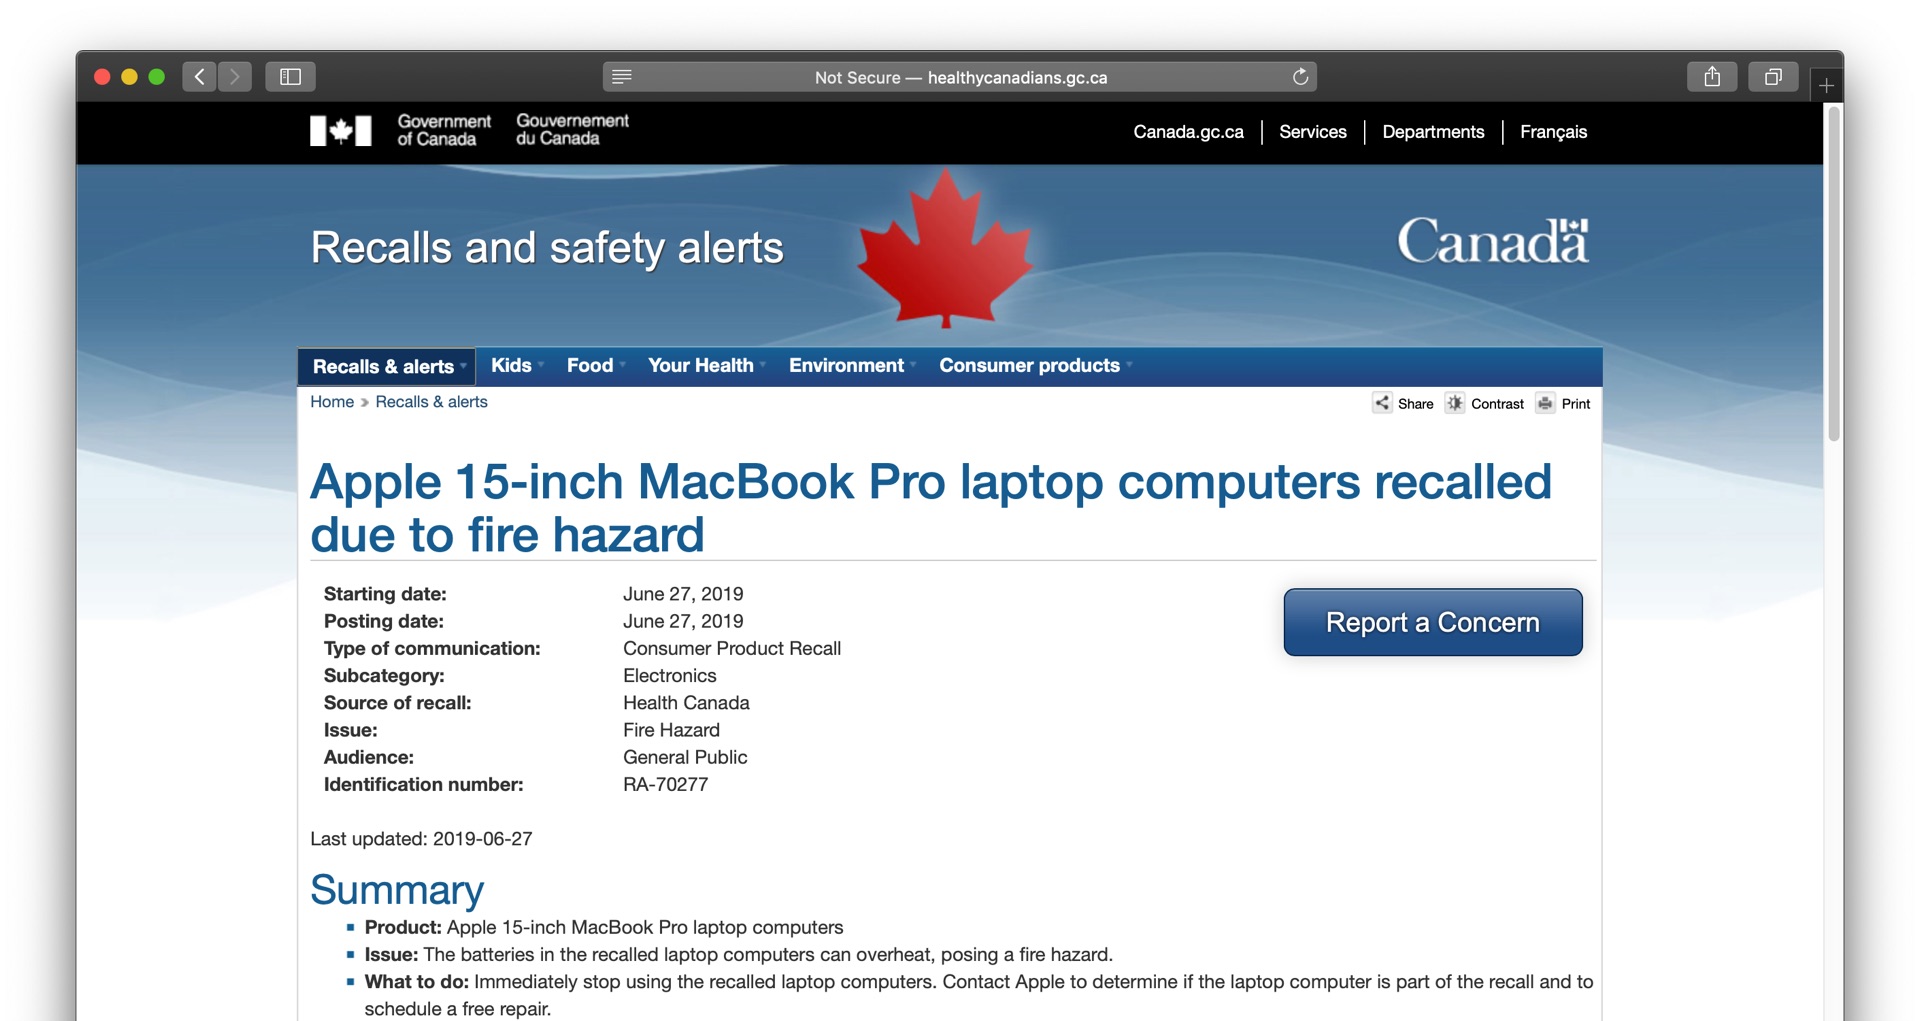 Apple 15-inch MacBook Pro laptop computers recalled due to fire hazard